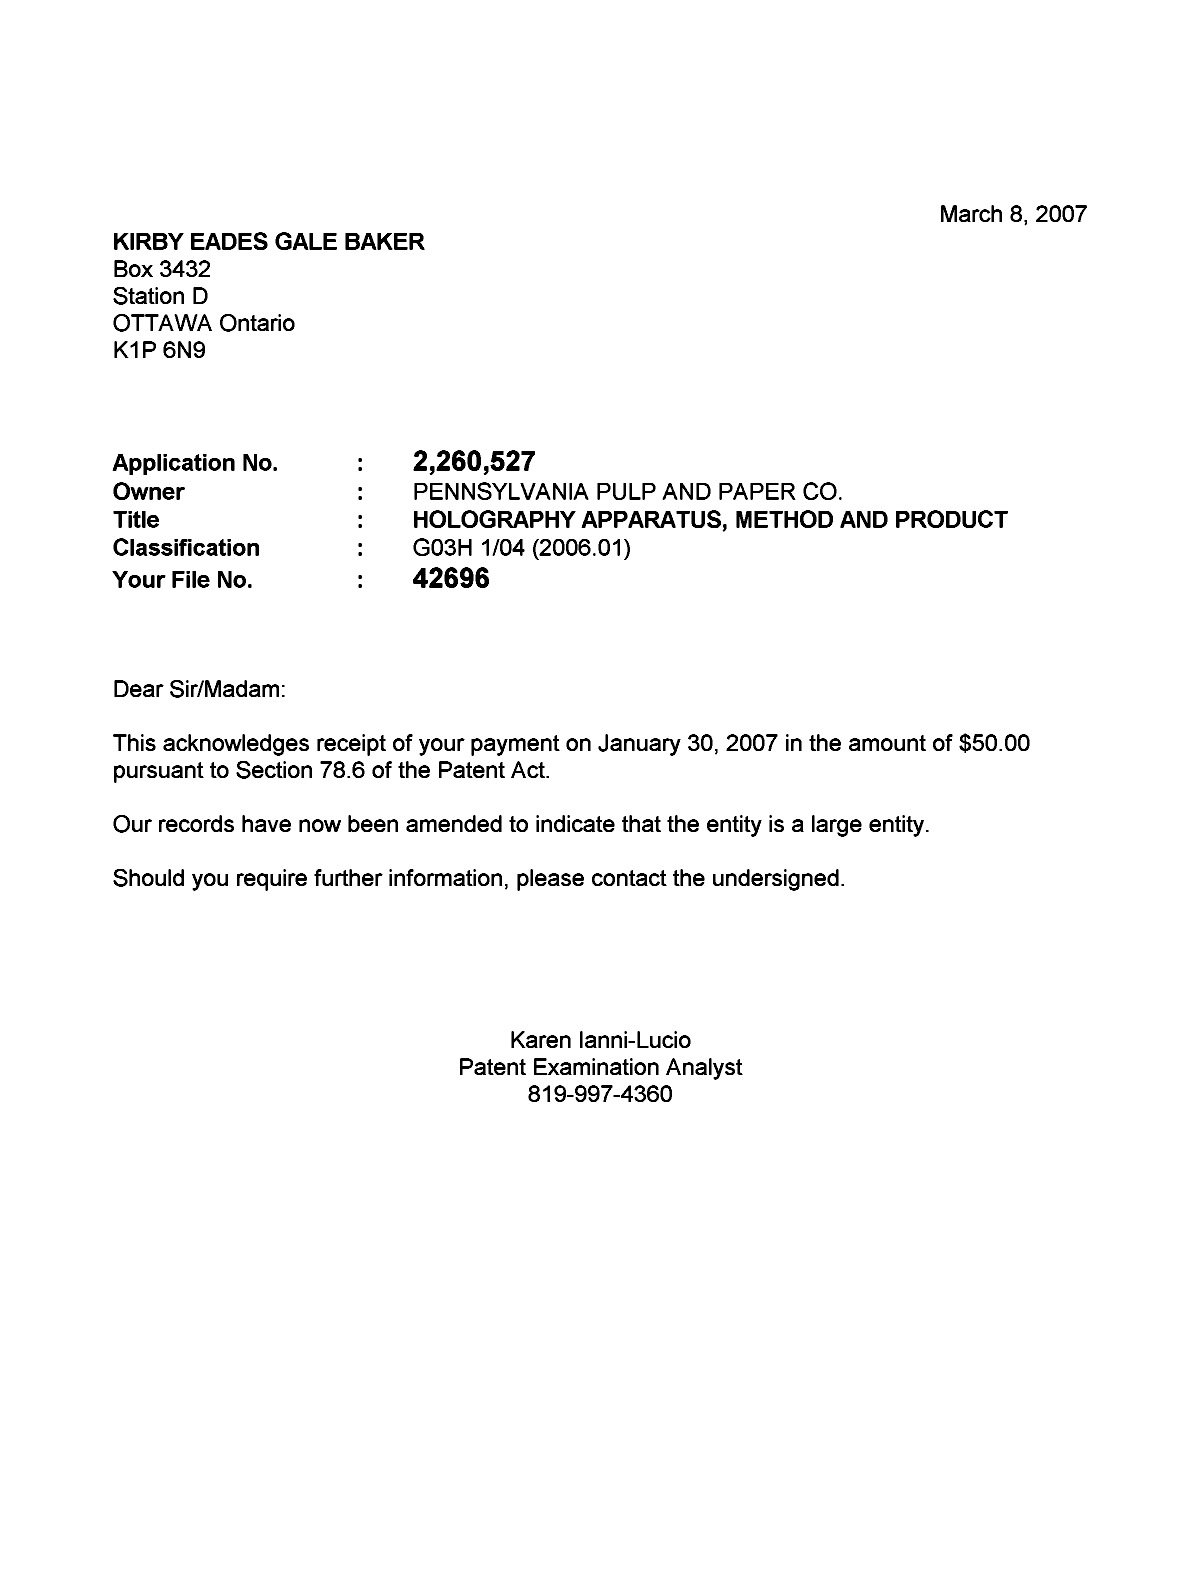 Canadian Patent Document 2260527. Correspondence 20070308. Image 1 of 1